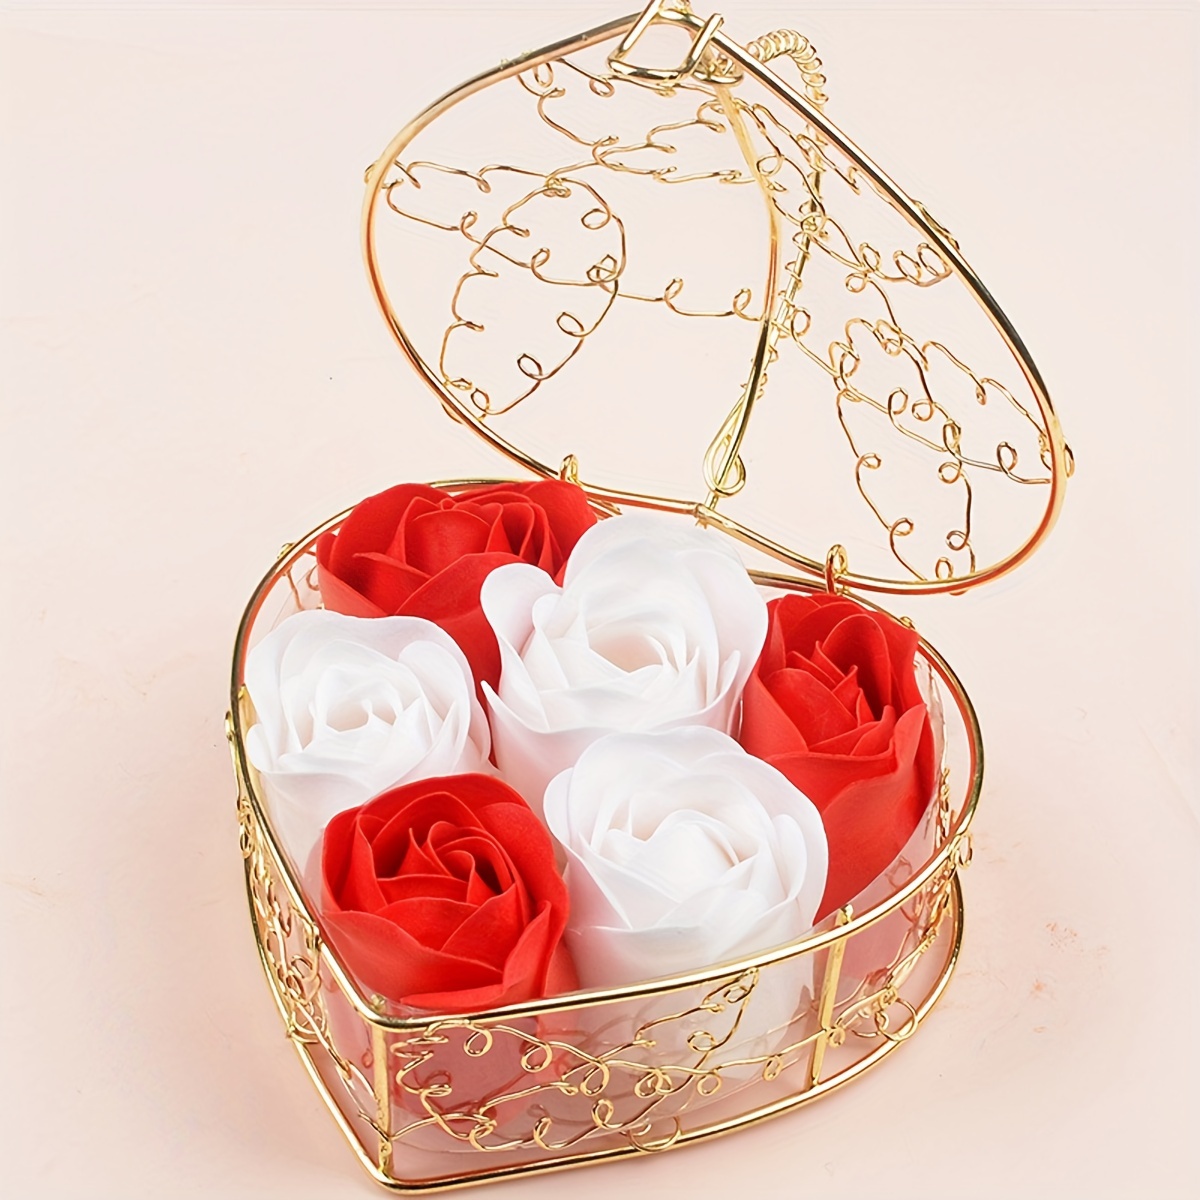 Red heart soap flower box